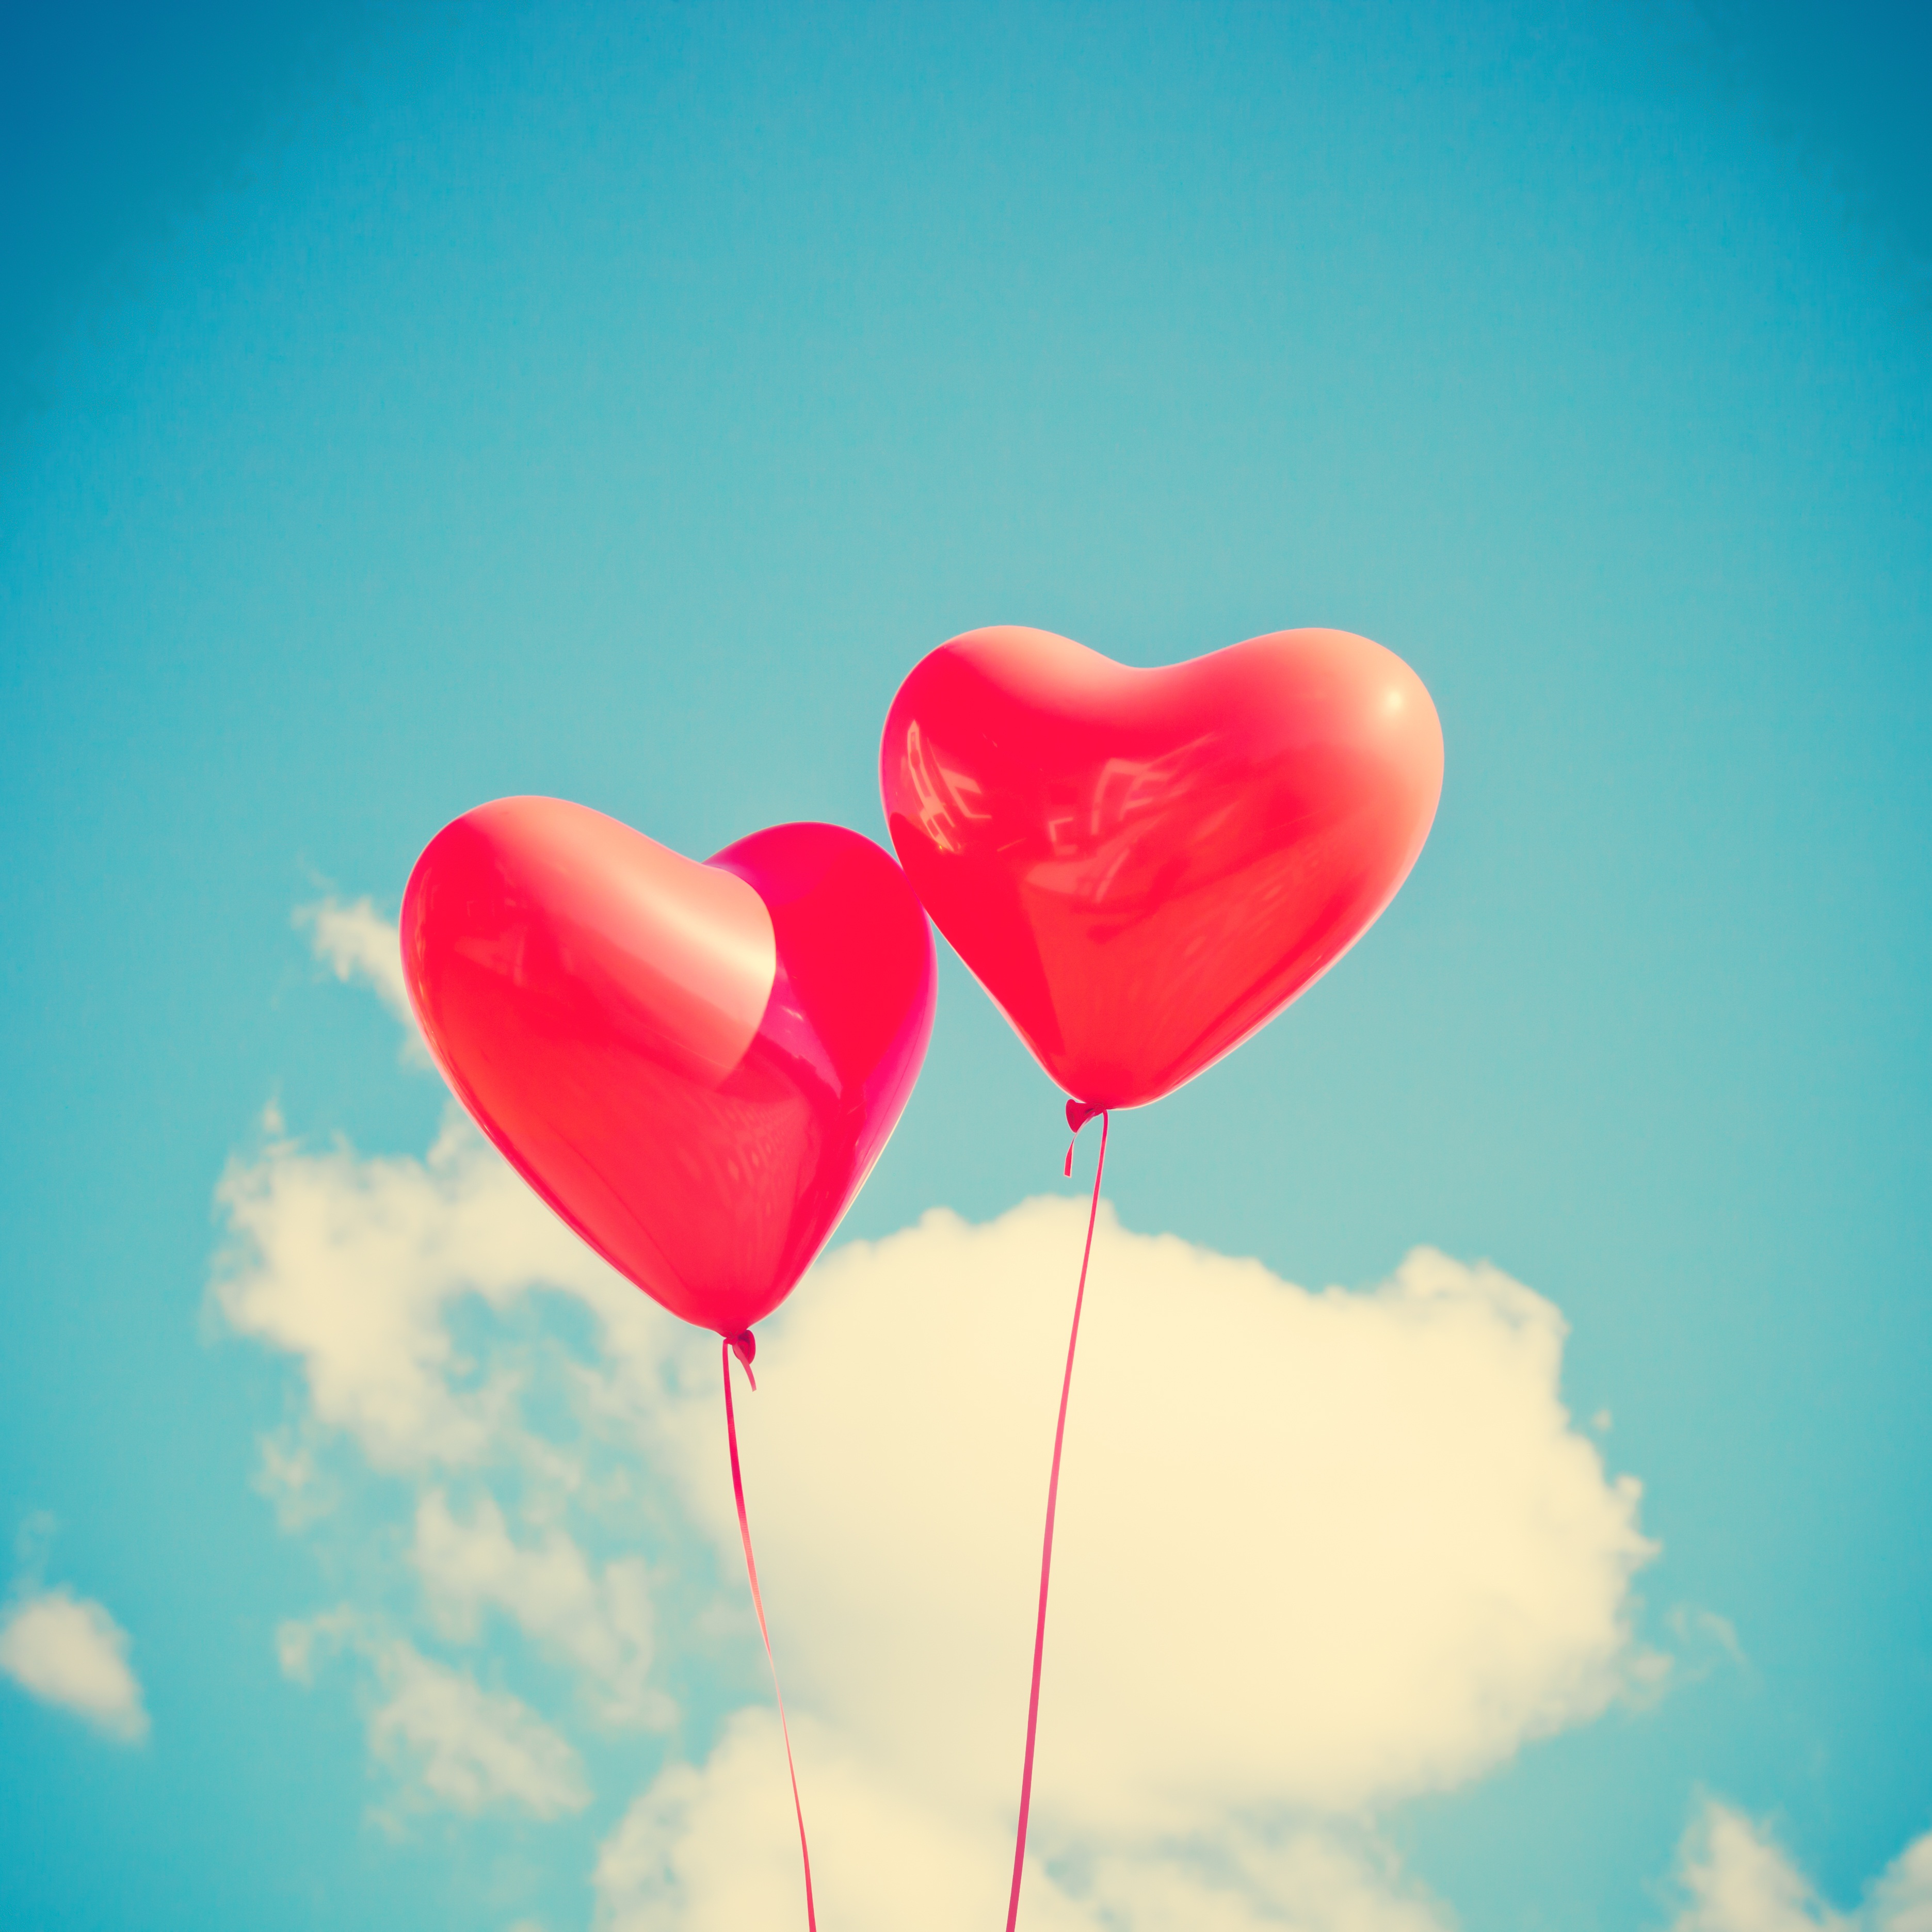 balloons, heart, love, sky, ease